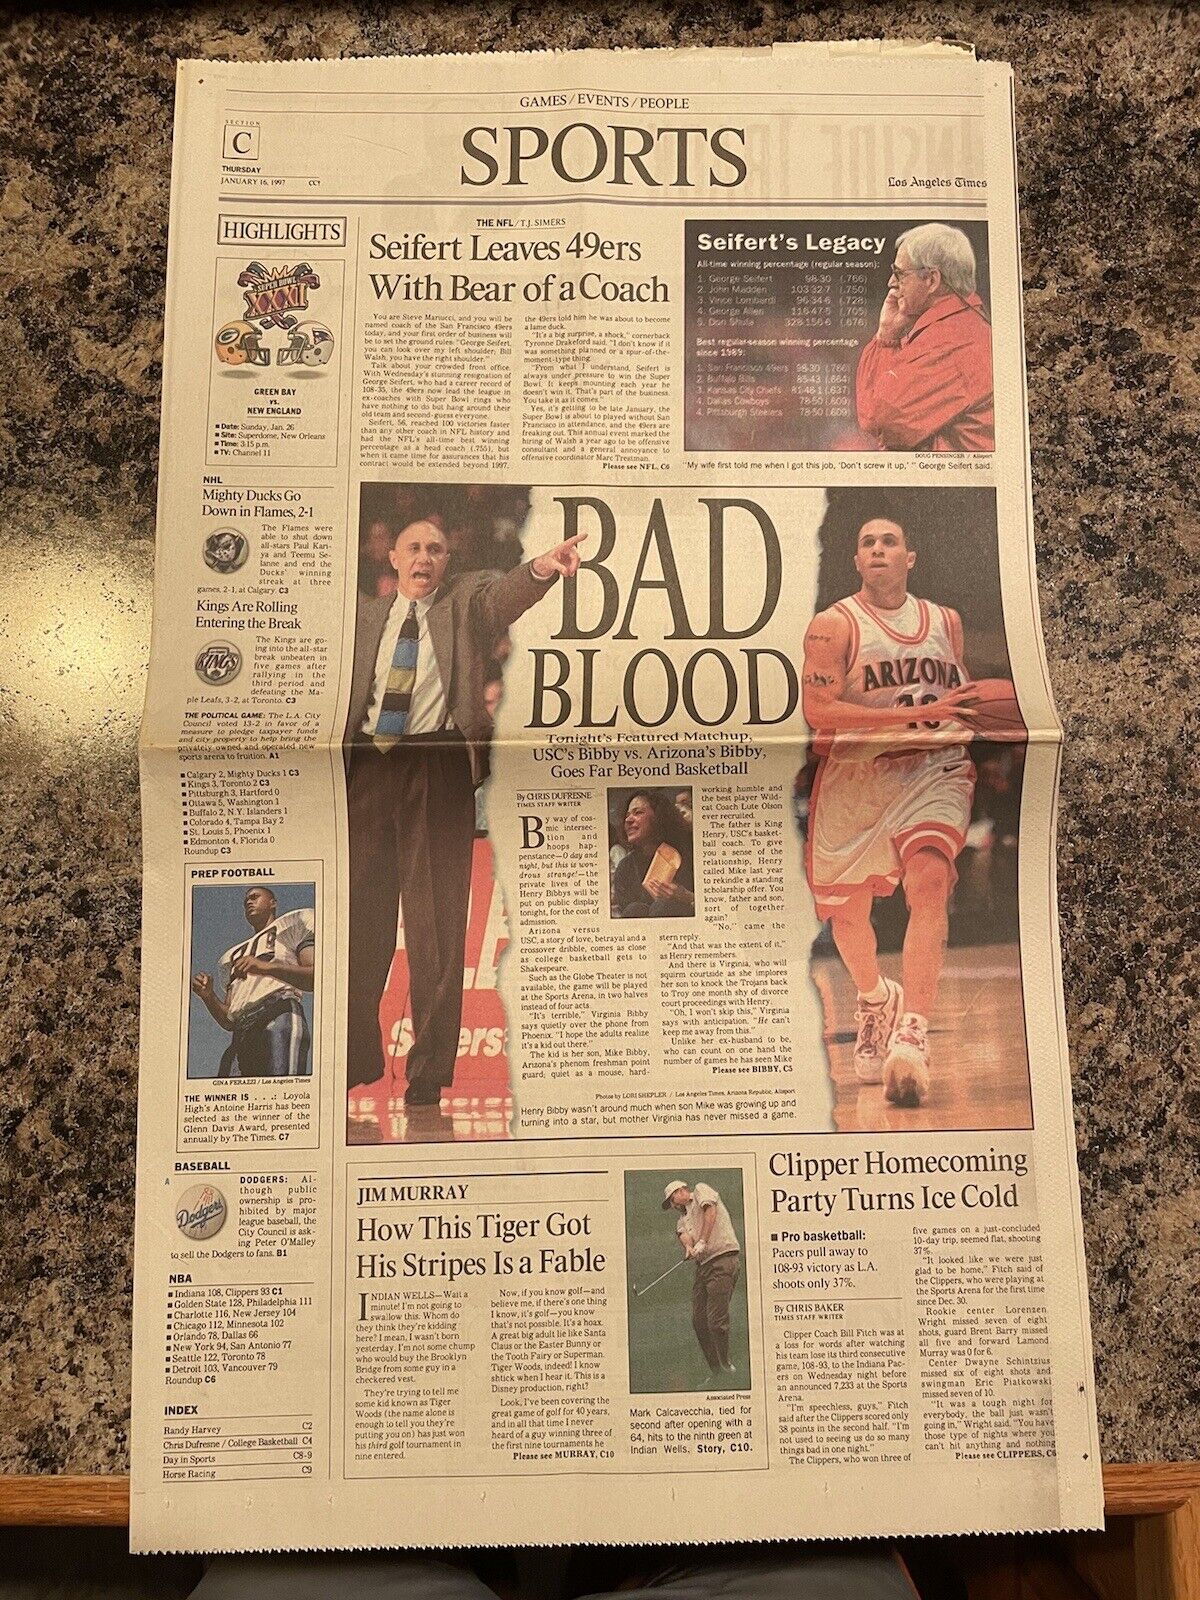 1997 Arizona Wildcats Basketball Newspaper.  Mike Bibby